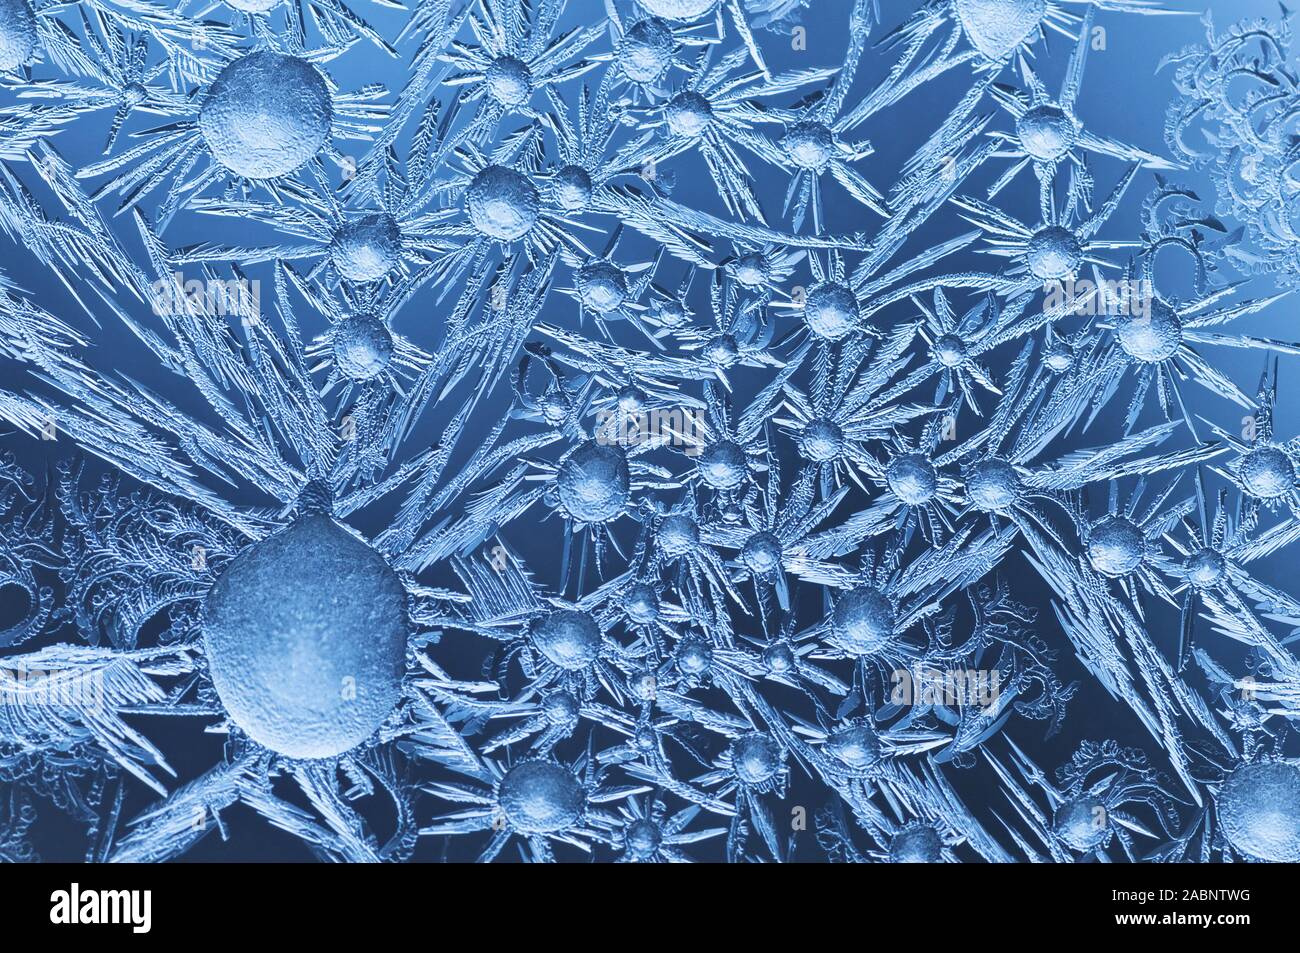 Maerz 2009 | Eisblumen un einer Fensterscheibe | fiori di ghiaccio su una finestra Foto Stock